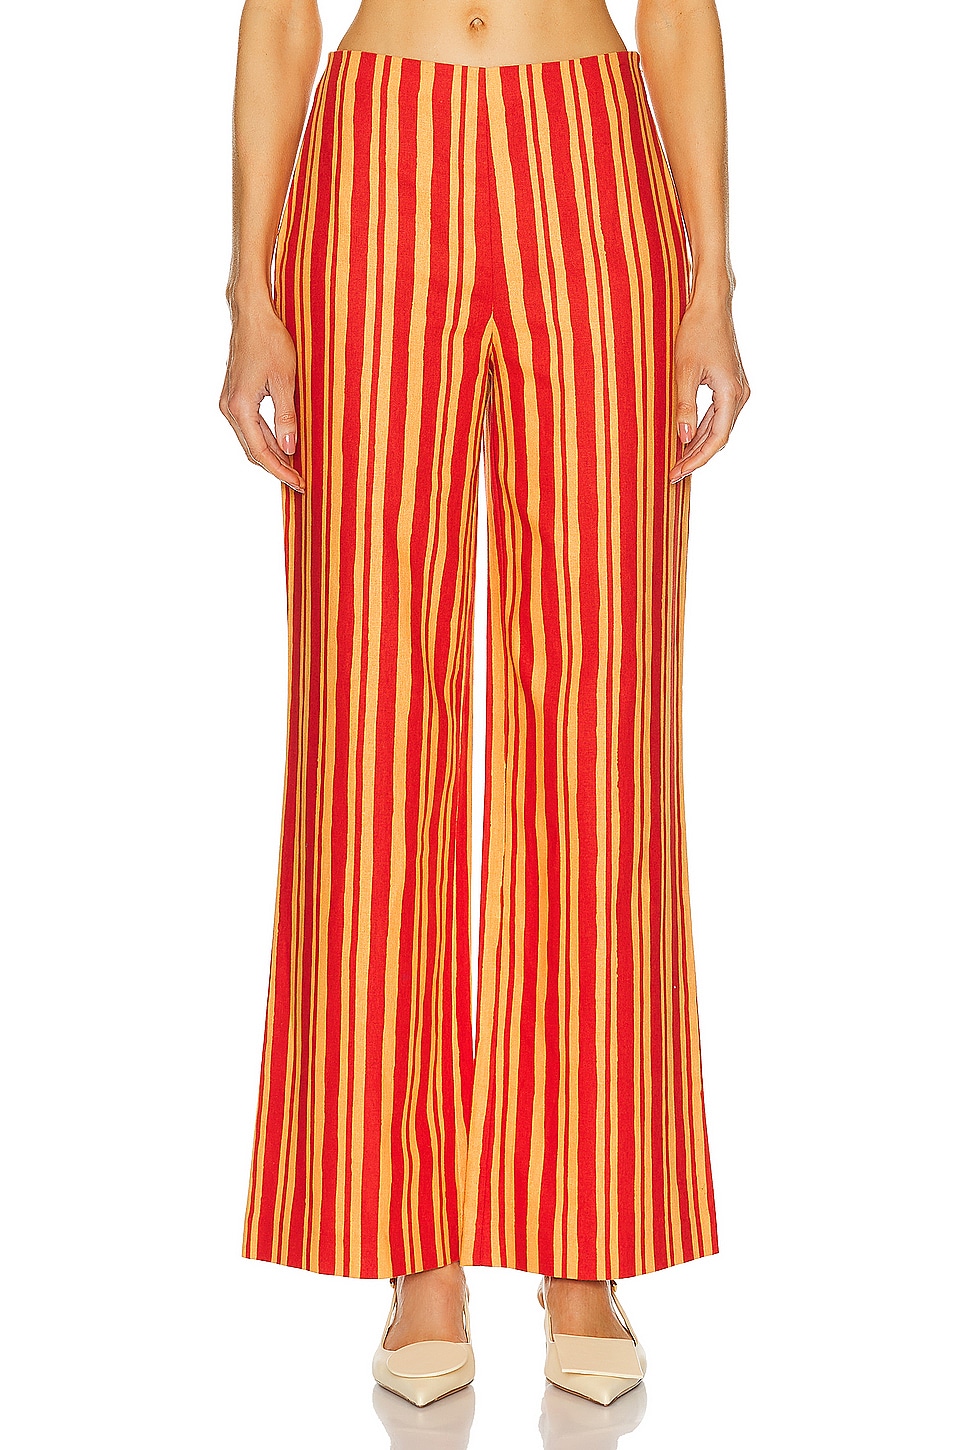 Image 1 of Simon Miller Pia Linen Pant in Retro Red & Acid Orange Stripe